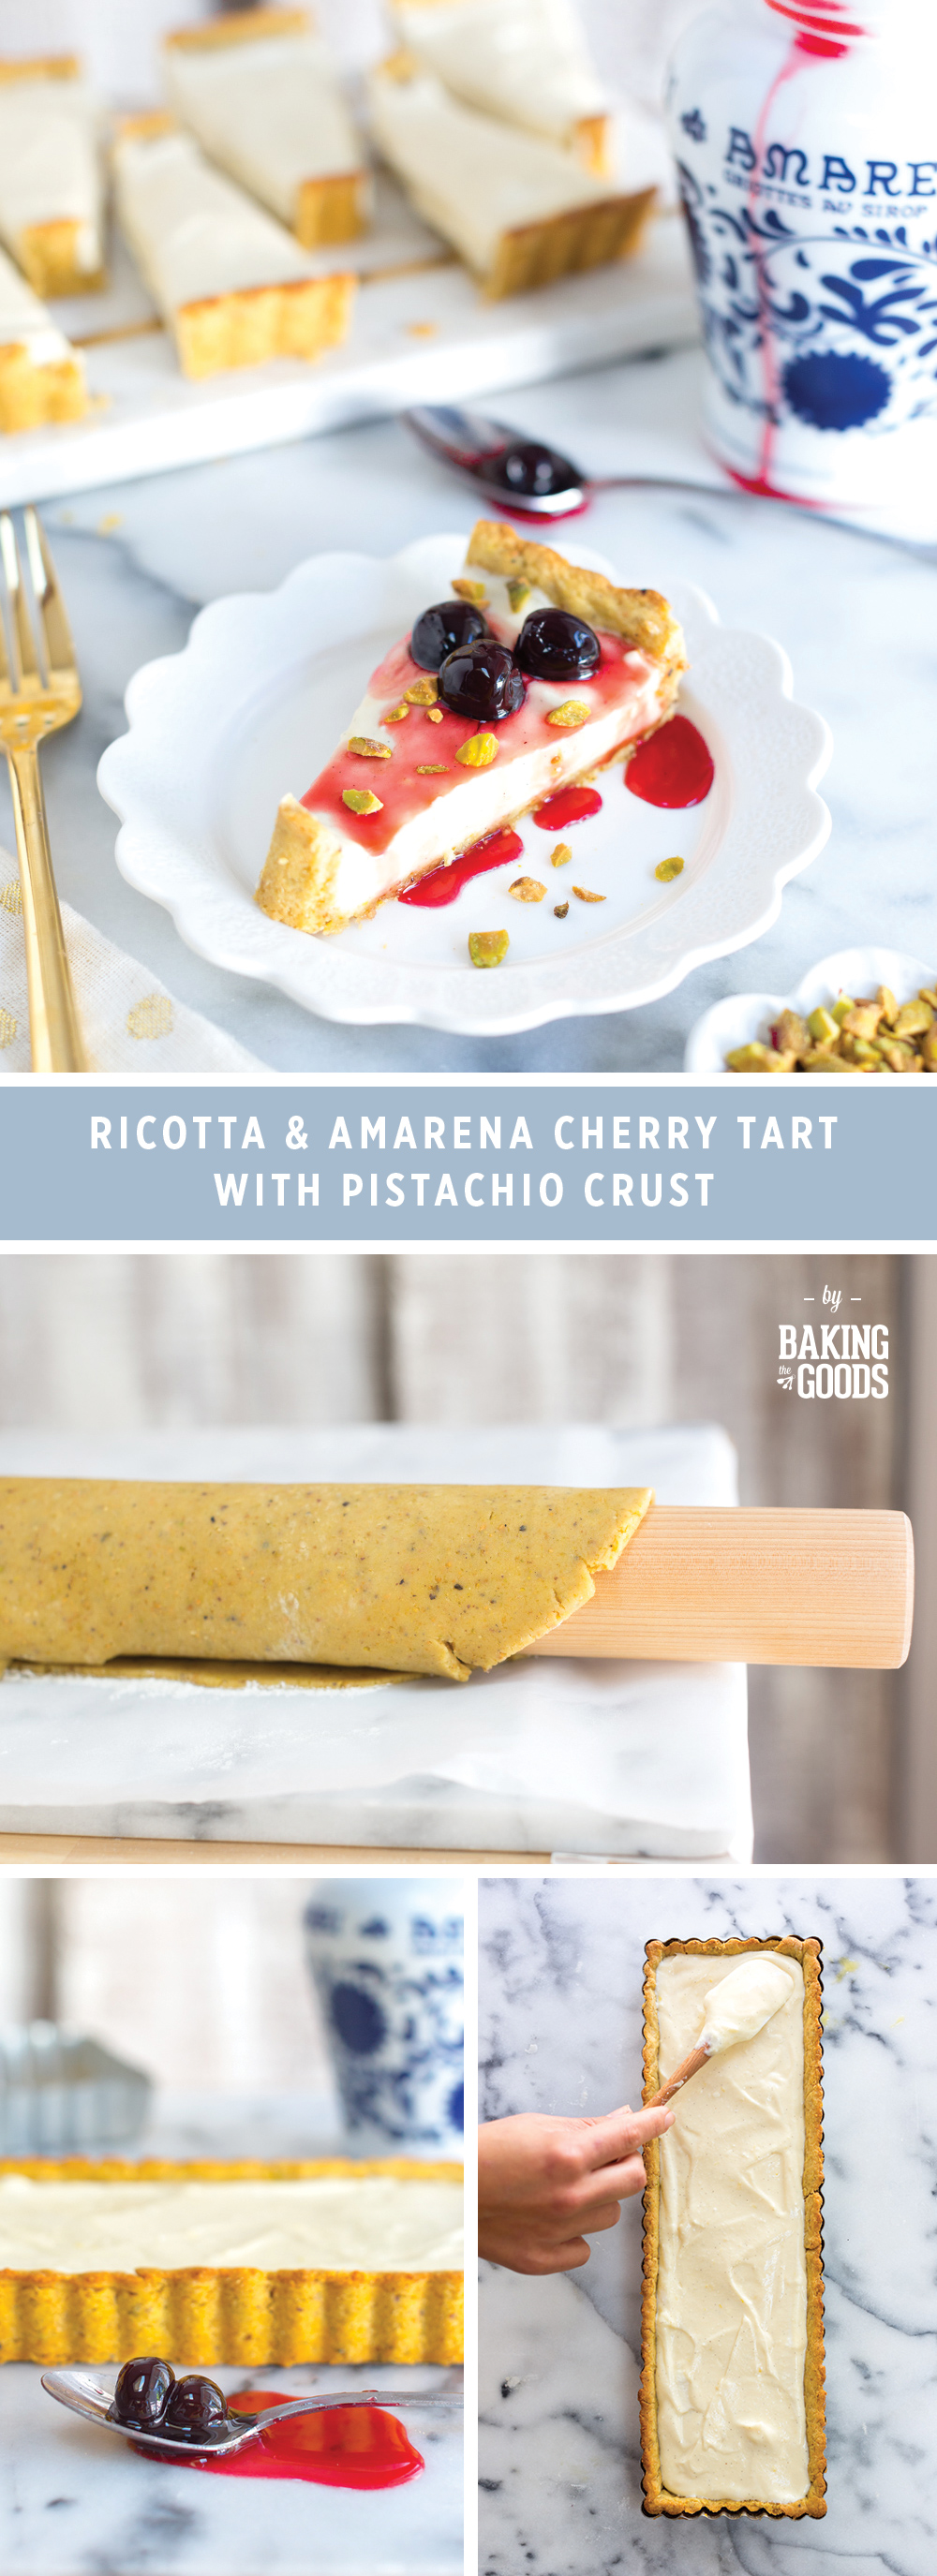 Ricotta & Amarena Cherry Tart with Pistachio Crust by Baking The Goods